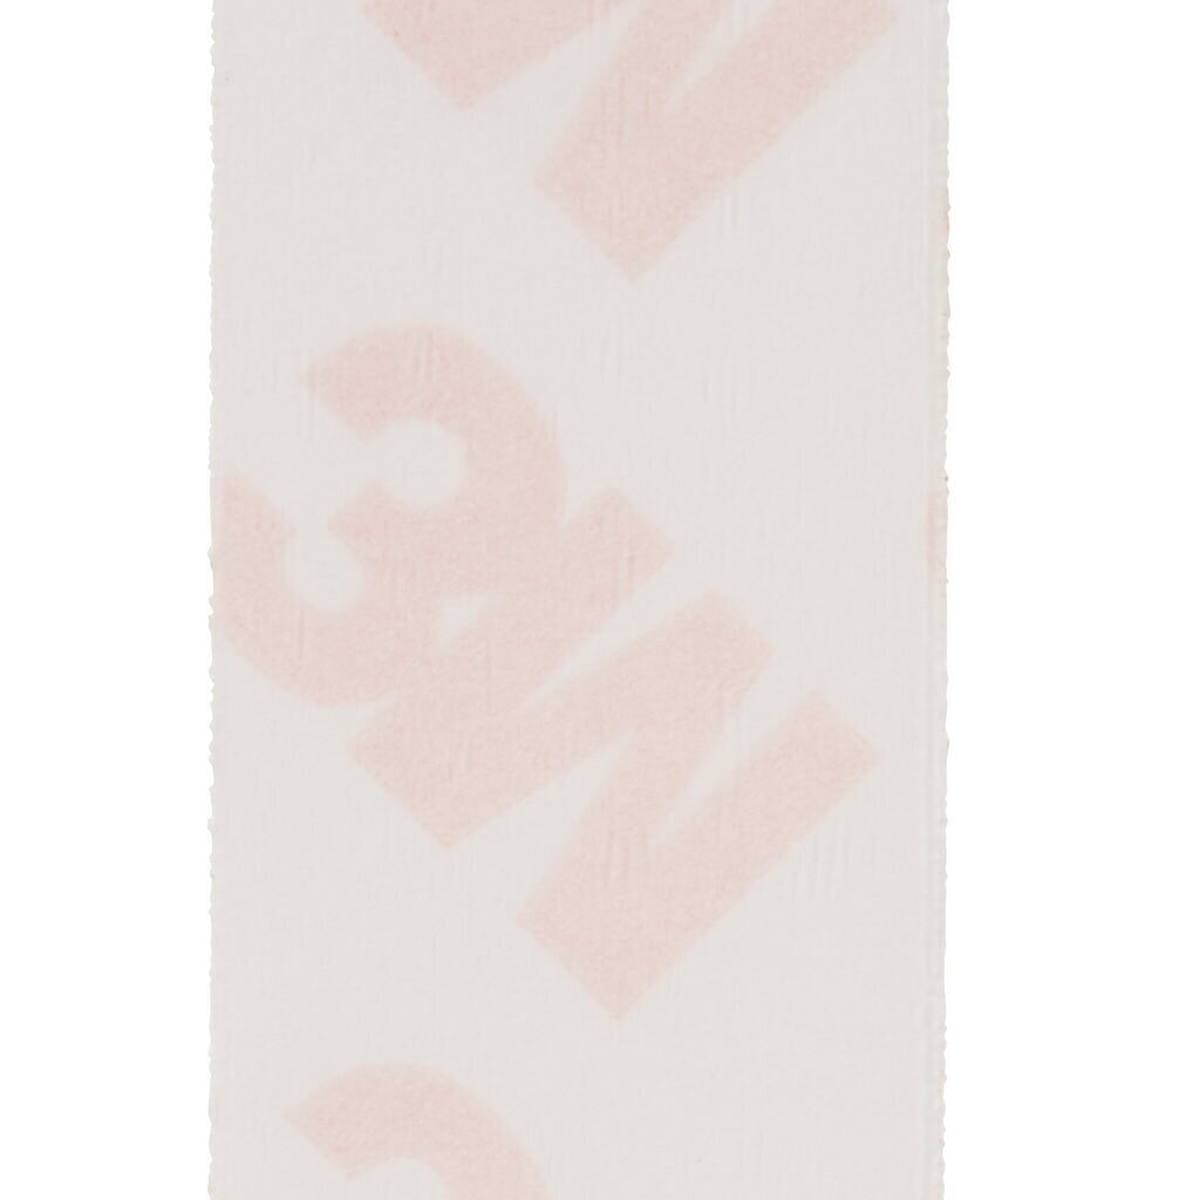 3M Dubbelzijdig plakband met polyester achterkant 9088-200, transparant, 38 mm x 50 m, 0,2 mm